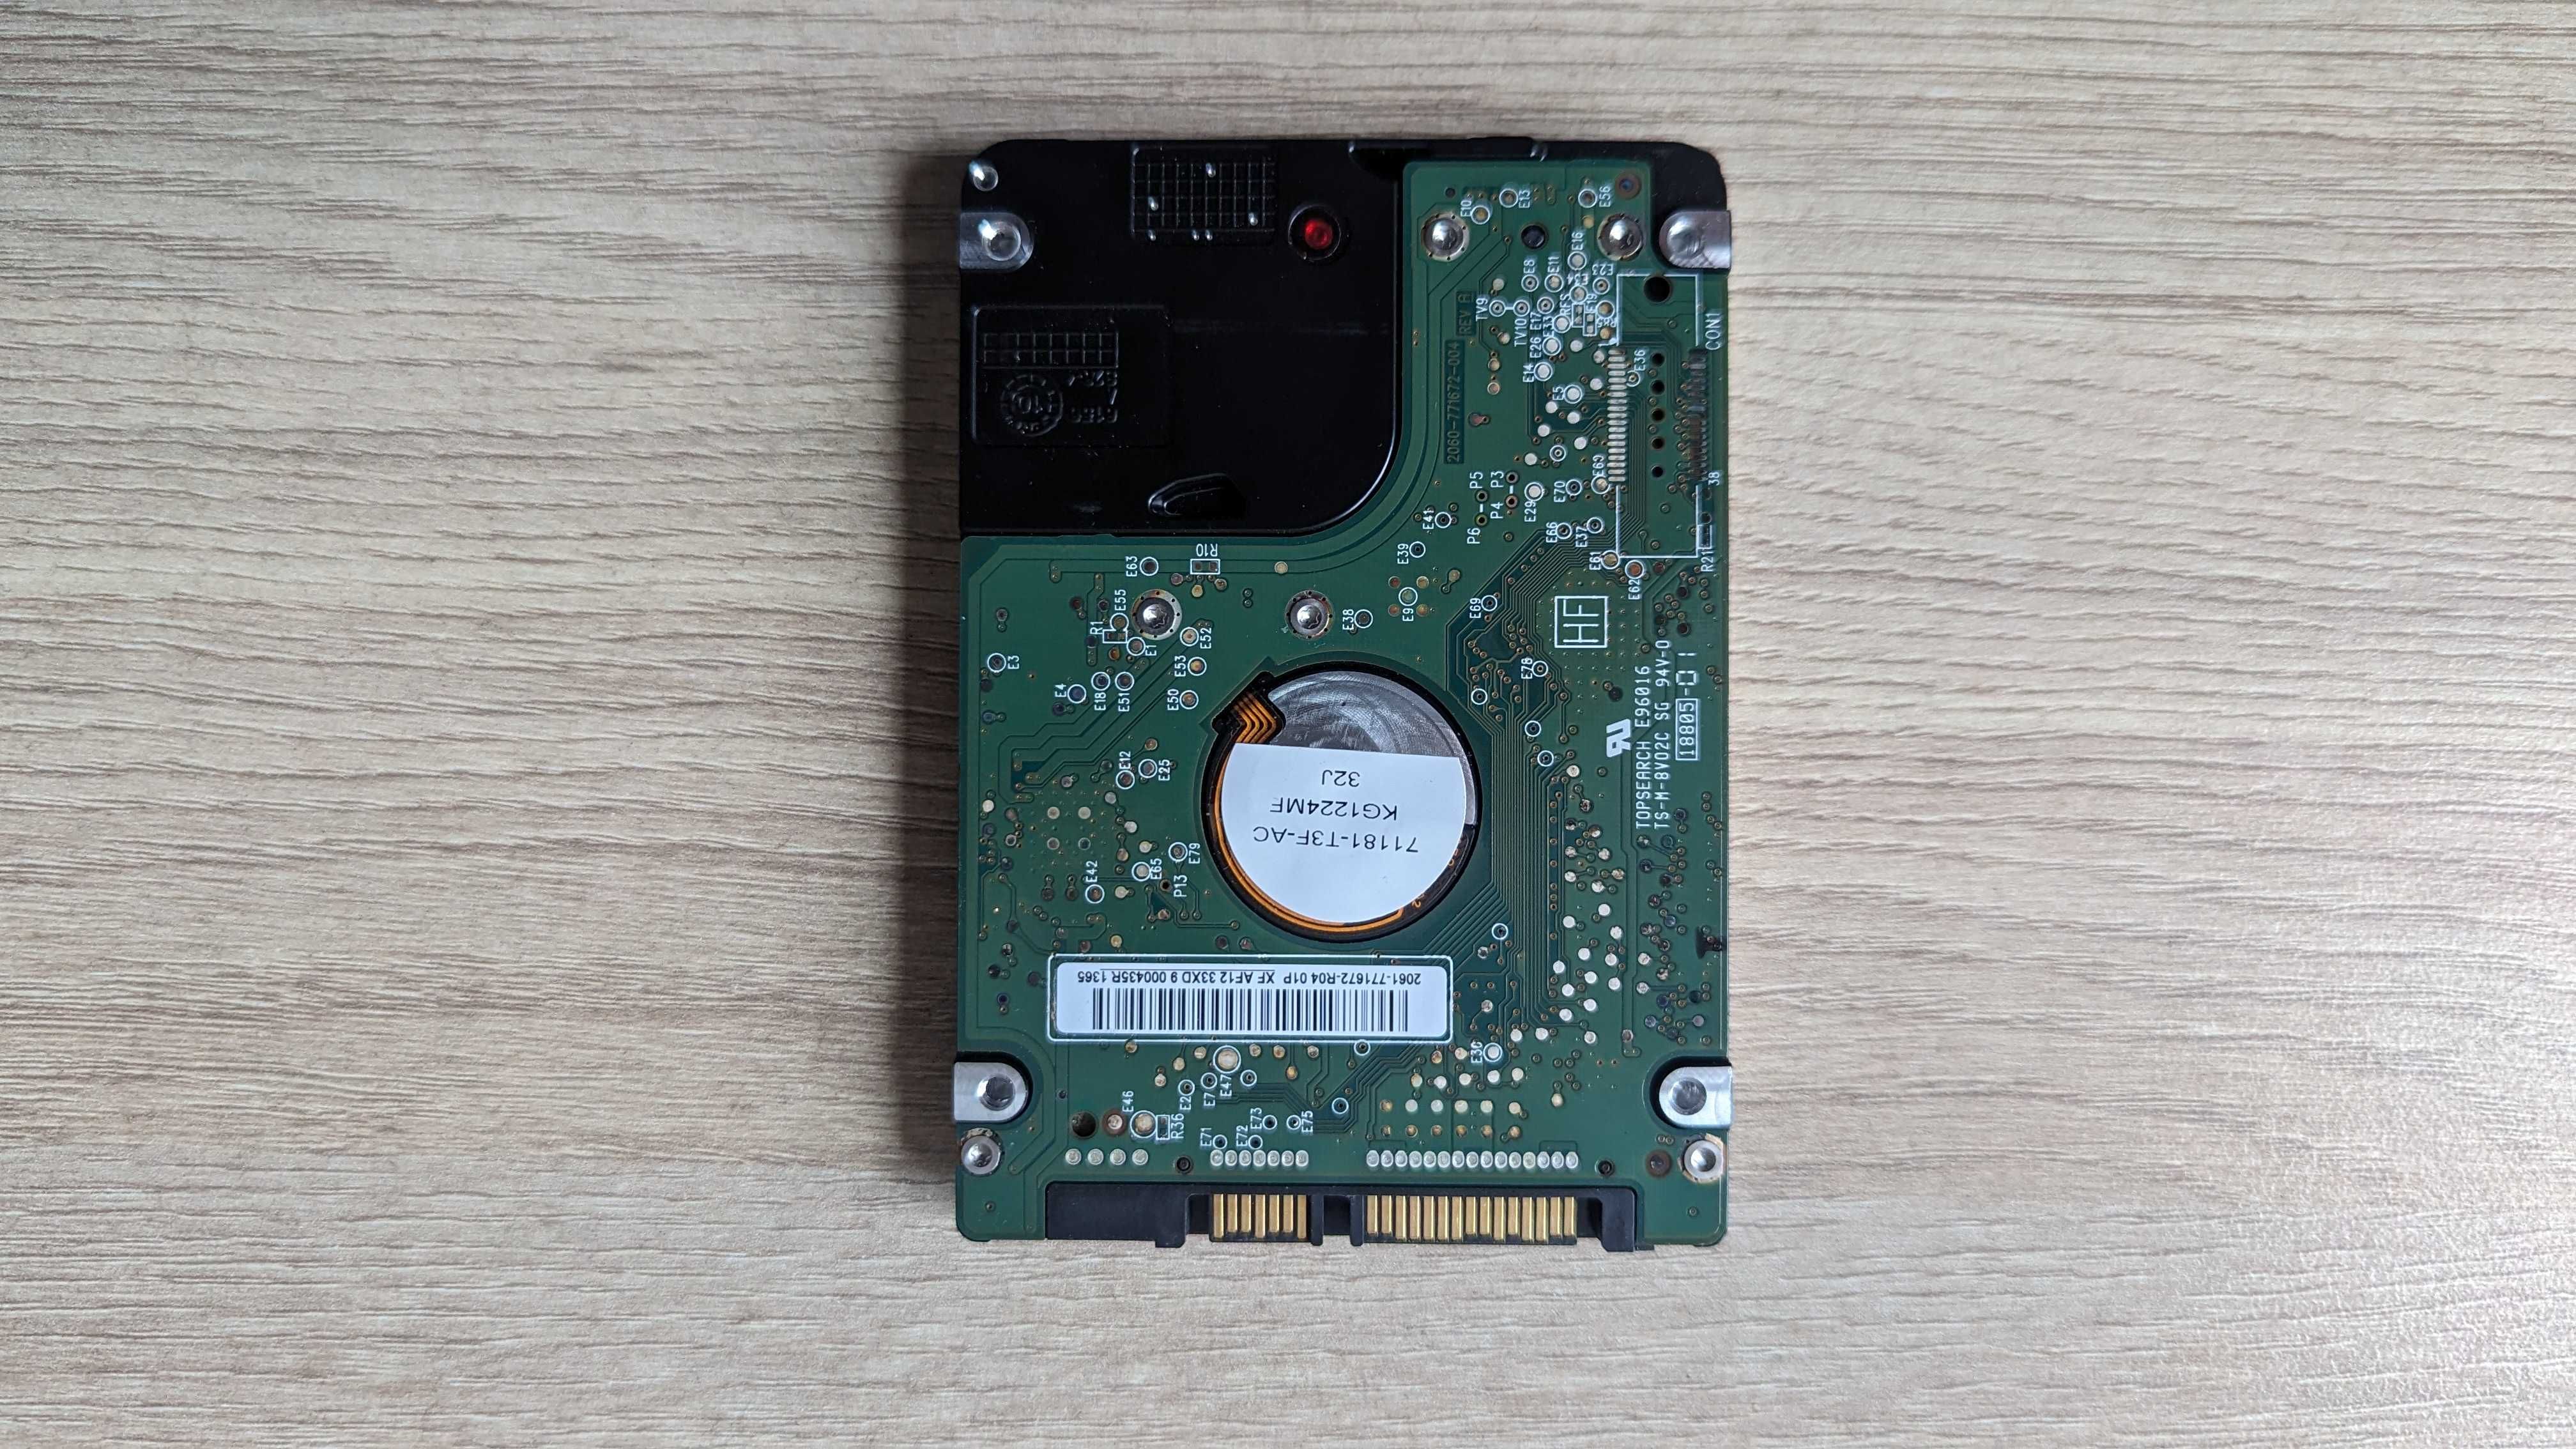 Жорсткий диск Western Digital Blue 320GB 5400rpm 8MB 2.5 SATA II